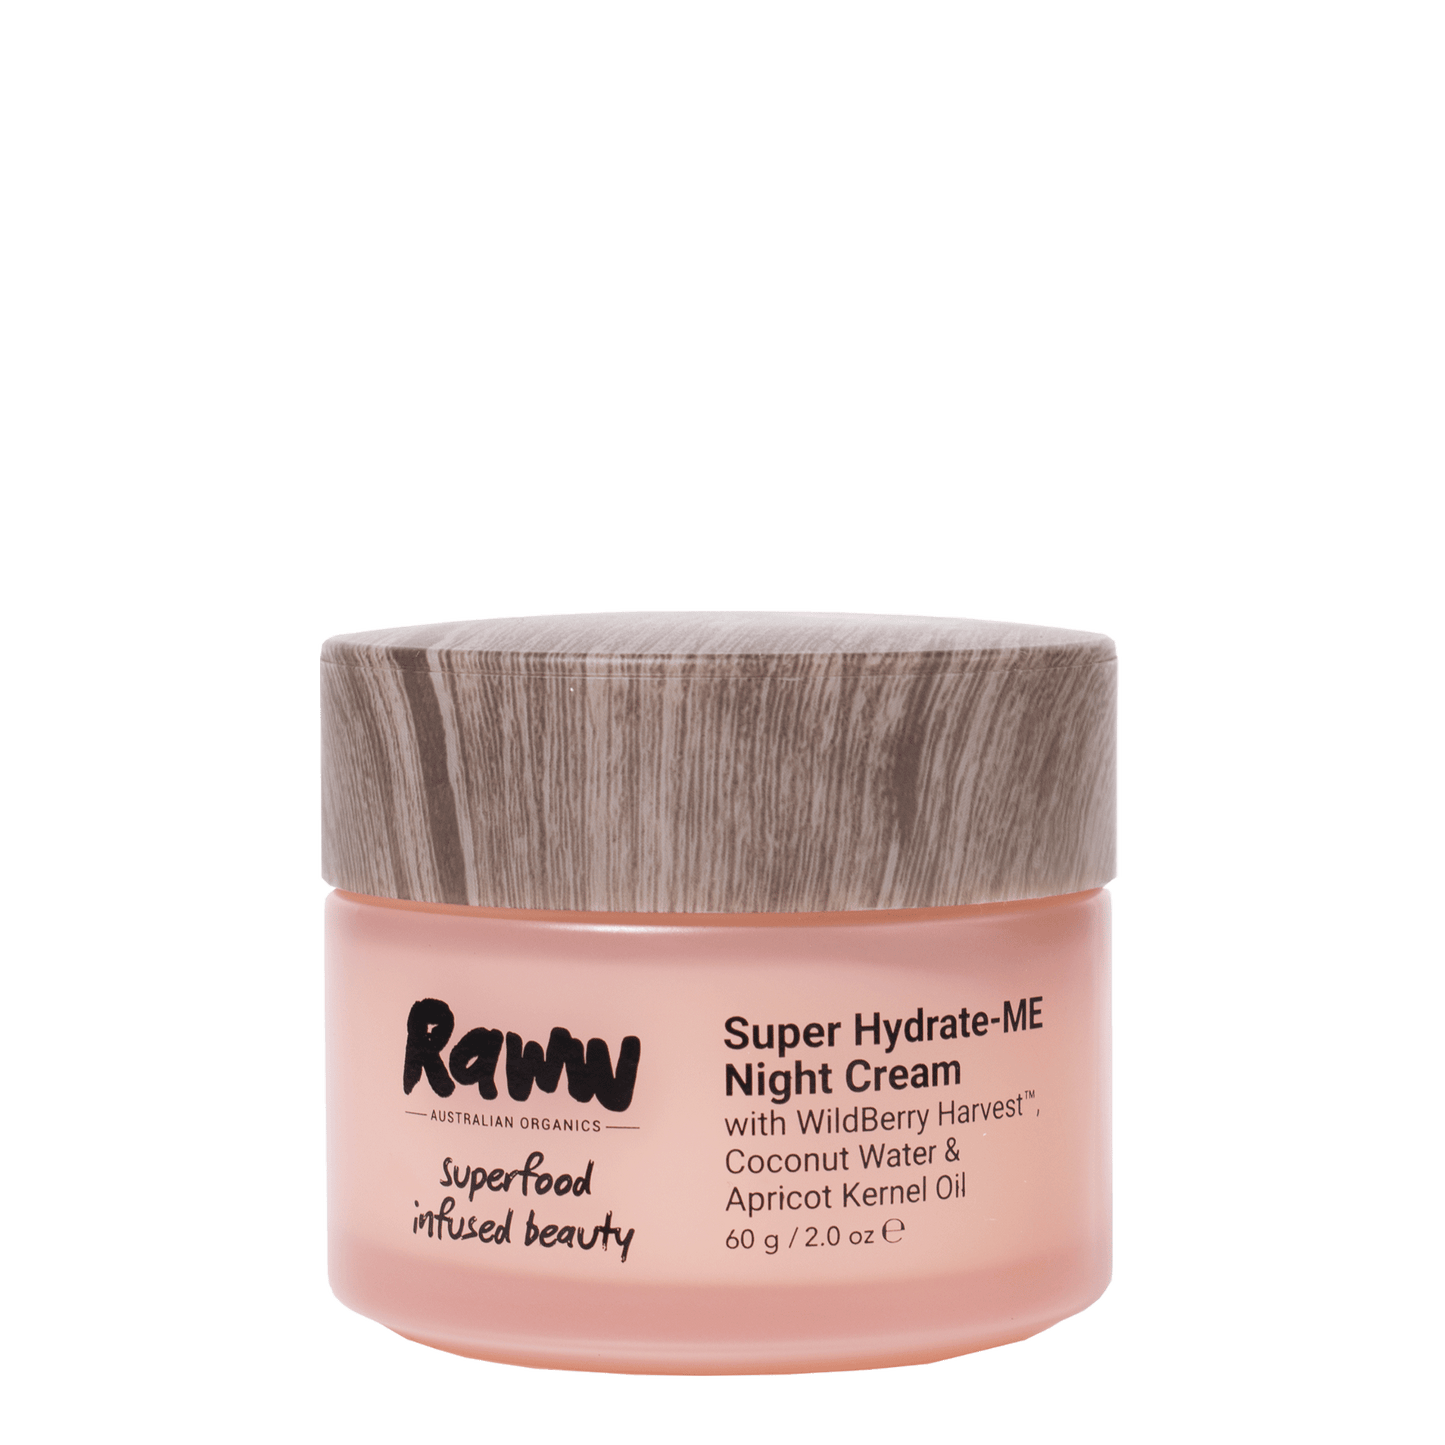 Super Hydrate-ME Night Cream | RAWW Cosmetics | 01